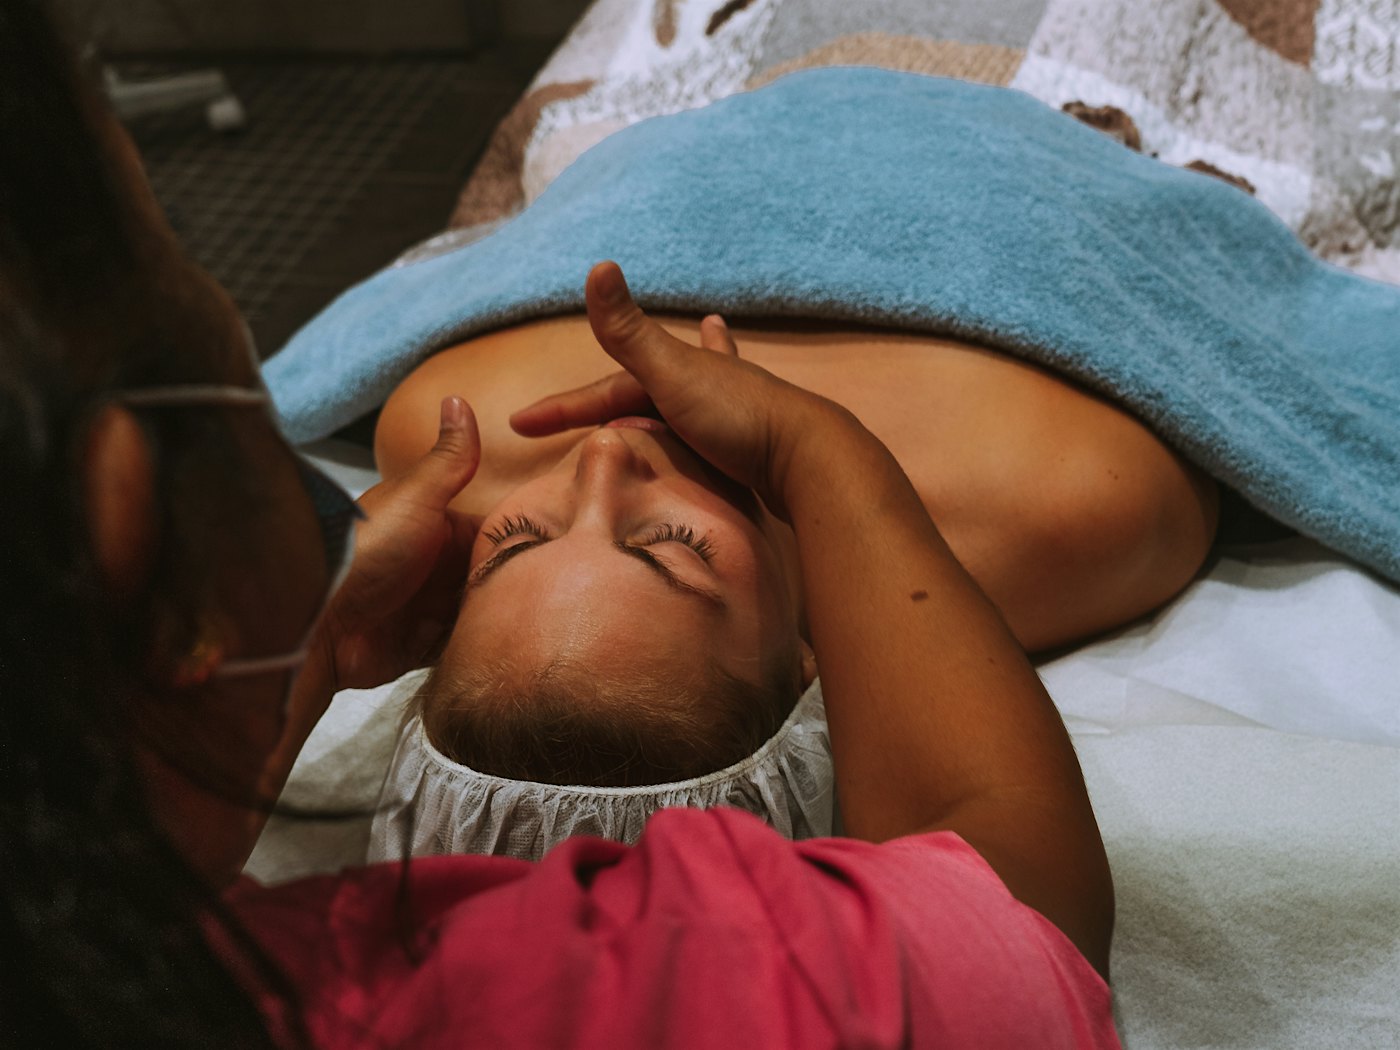 Girl lies on a massage bench and receives a facial massage from a masseur. Photo